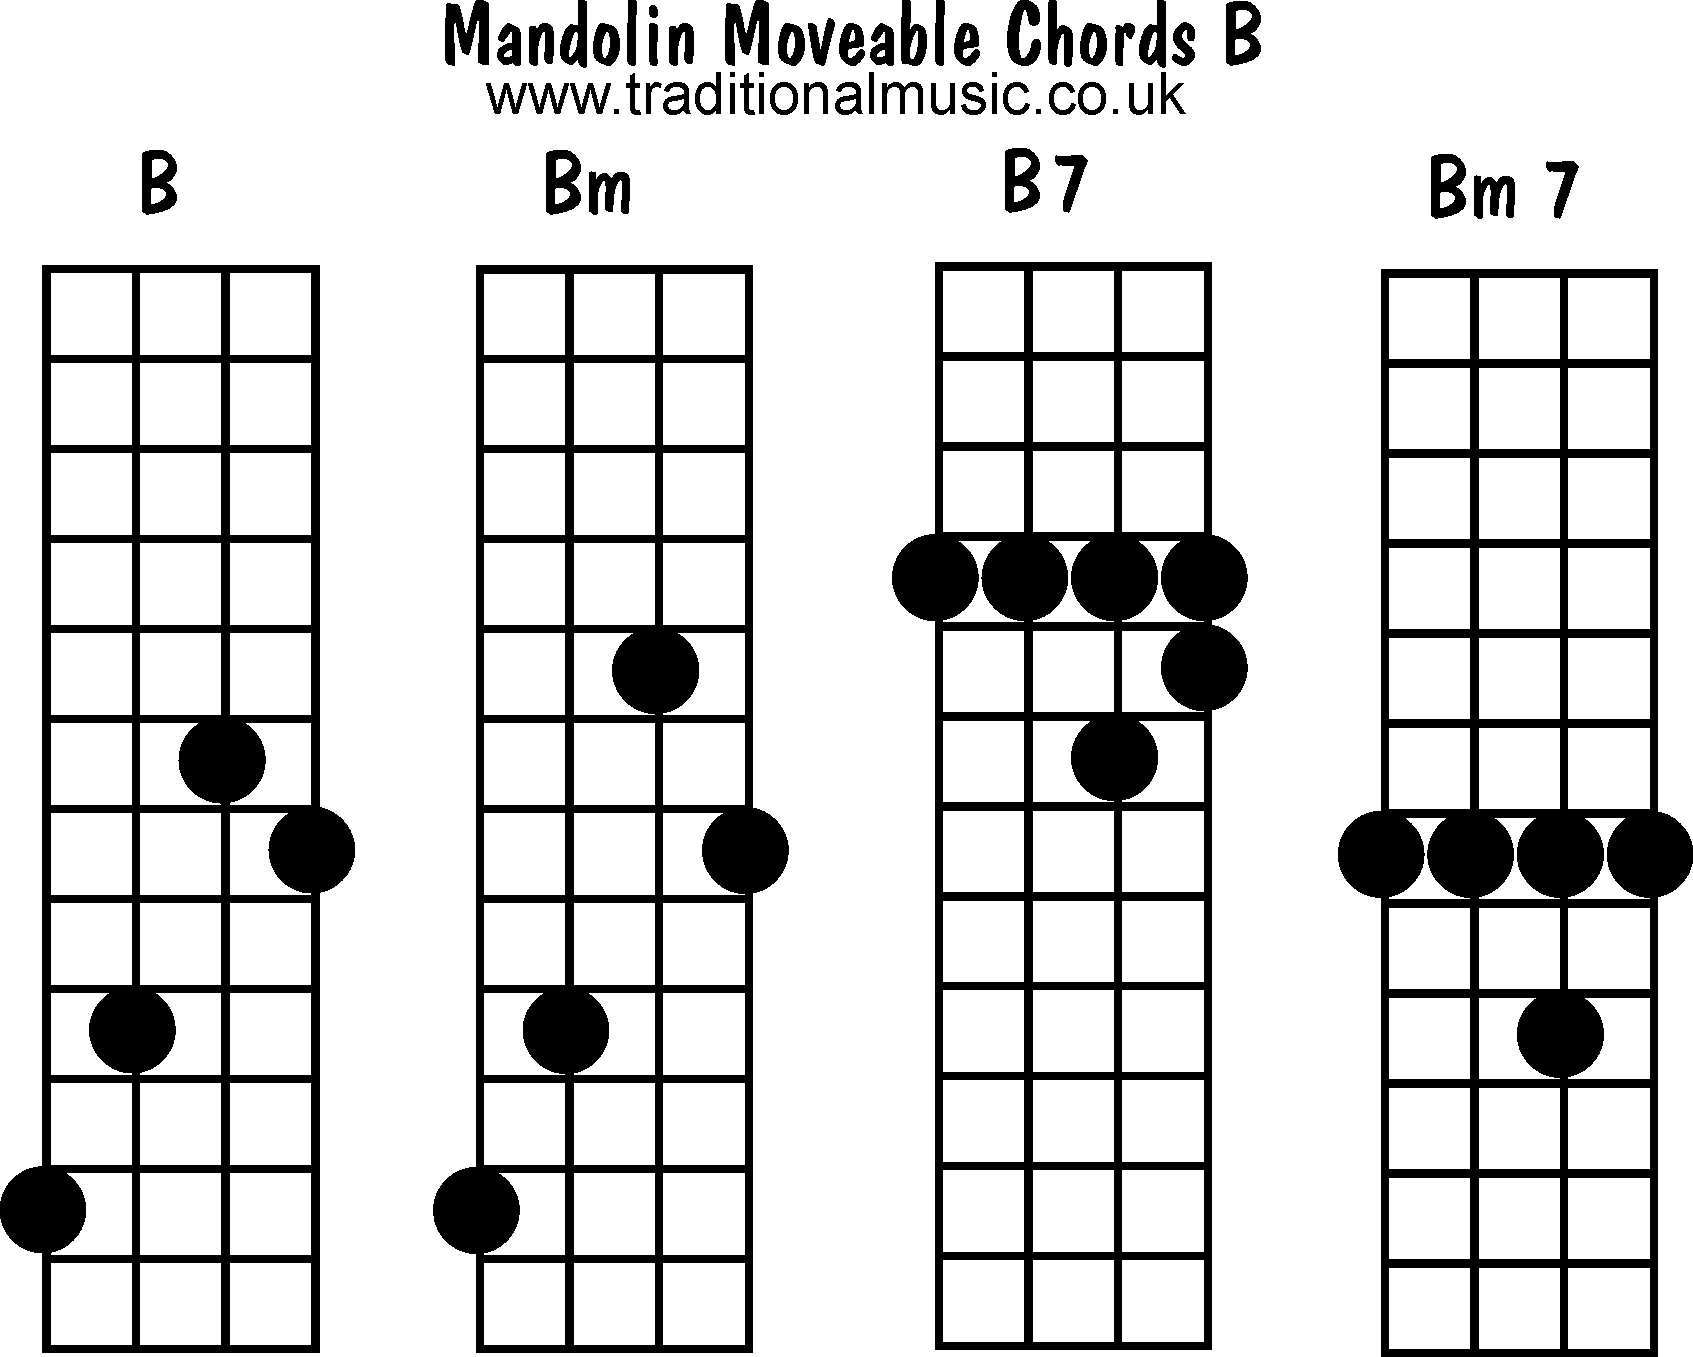 Moveable mandolin chords: B, Bm, B7, Bm7